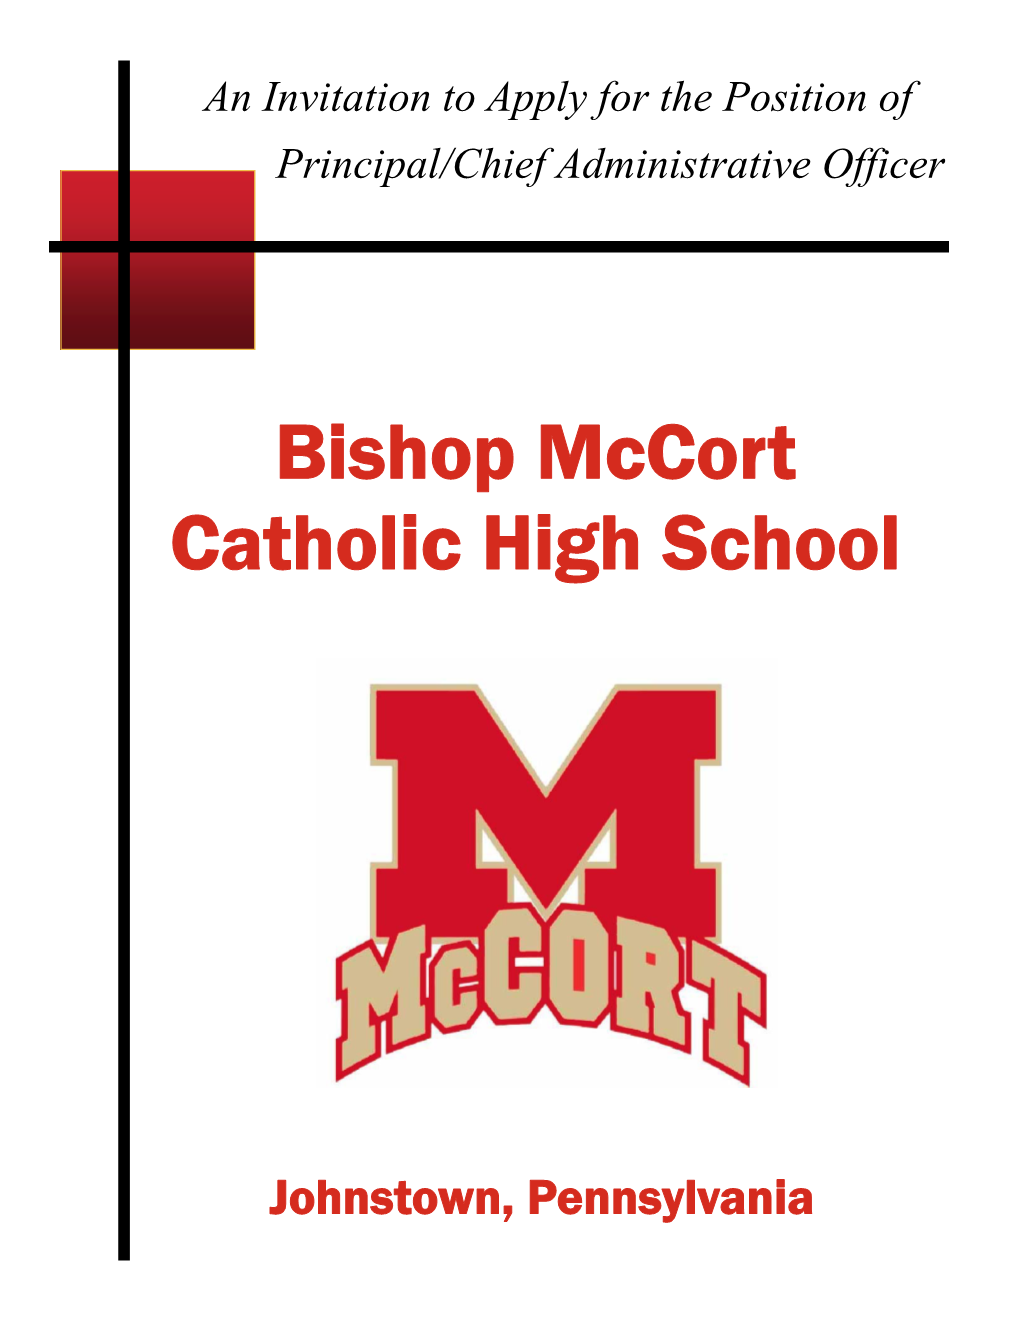 Bishop Mccort Catholic High School